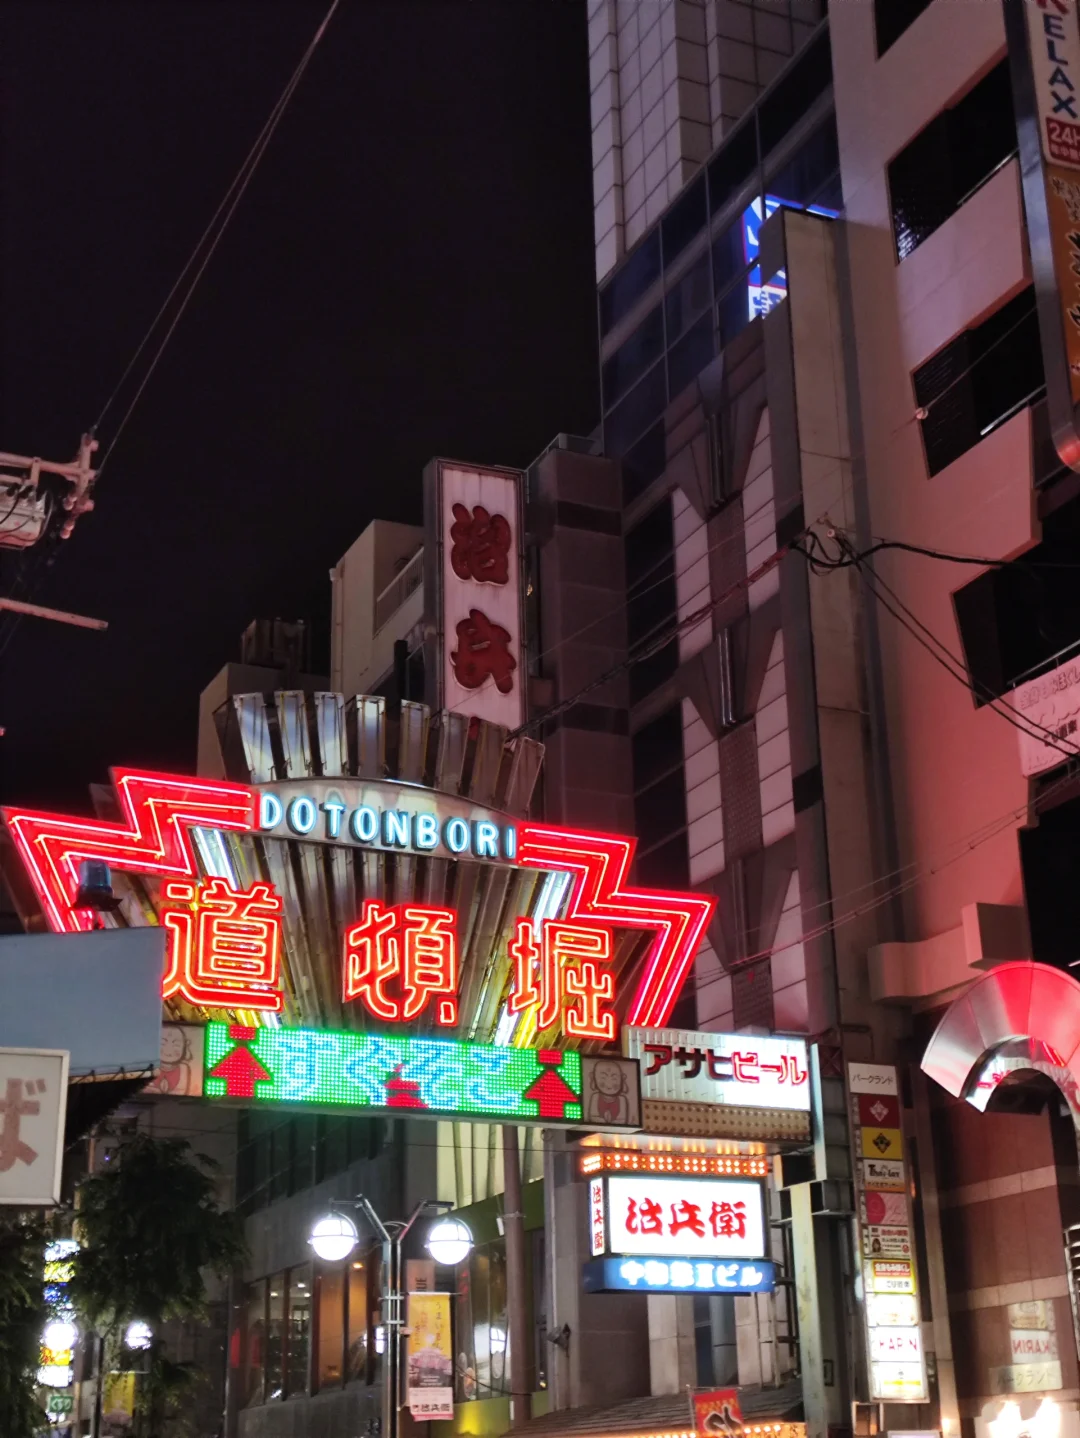 Osaka-Osaka Gala Bar, free for foreigners, dance fights and erotic jokes